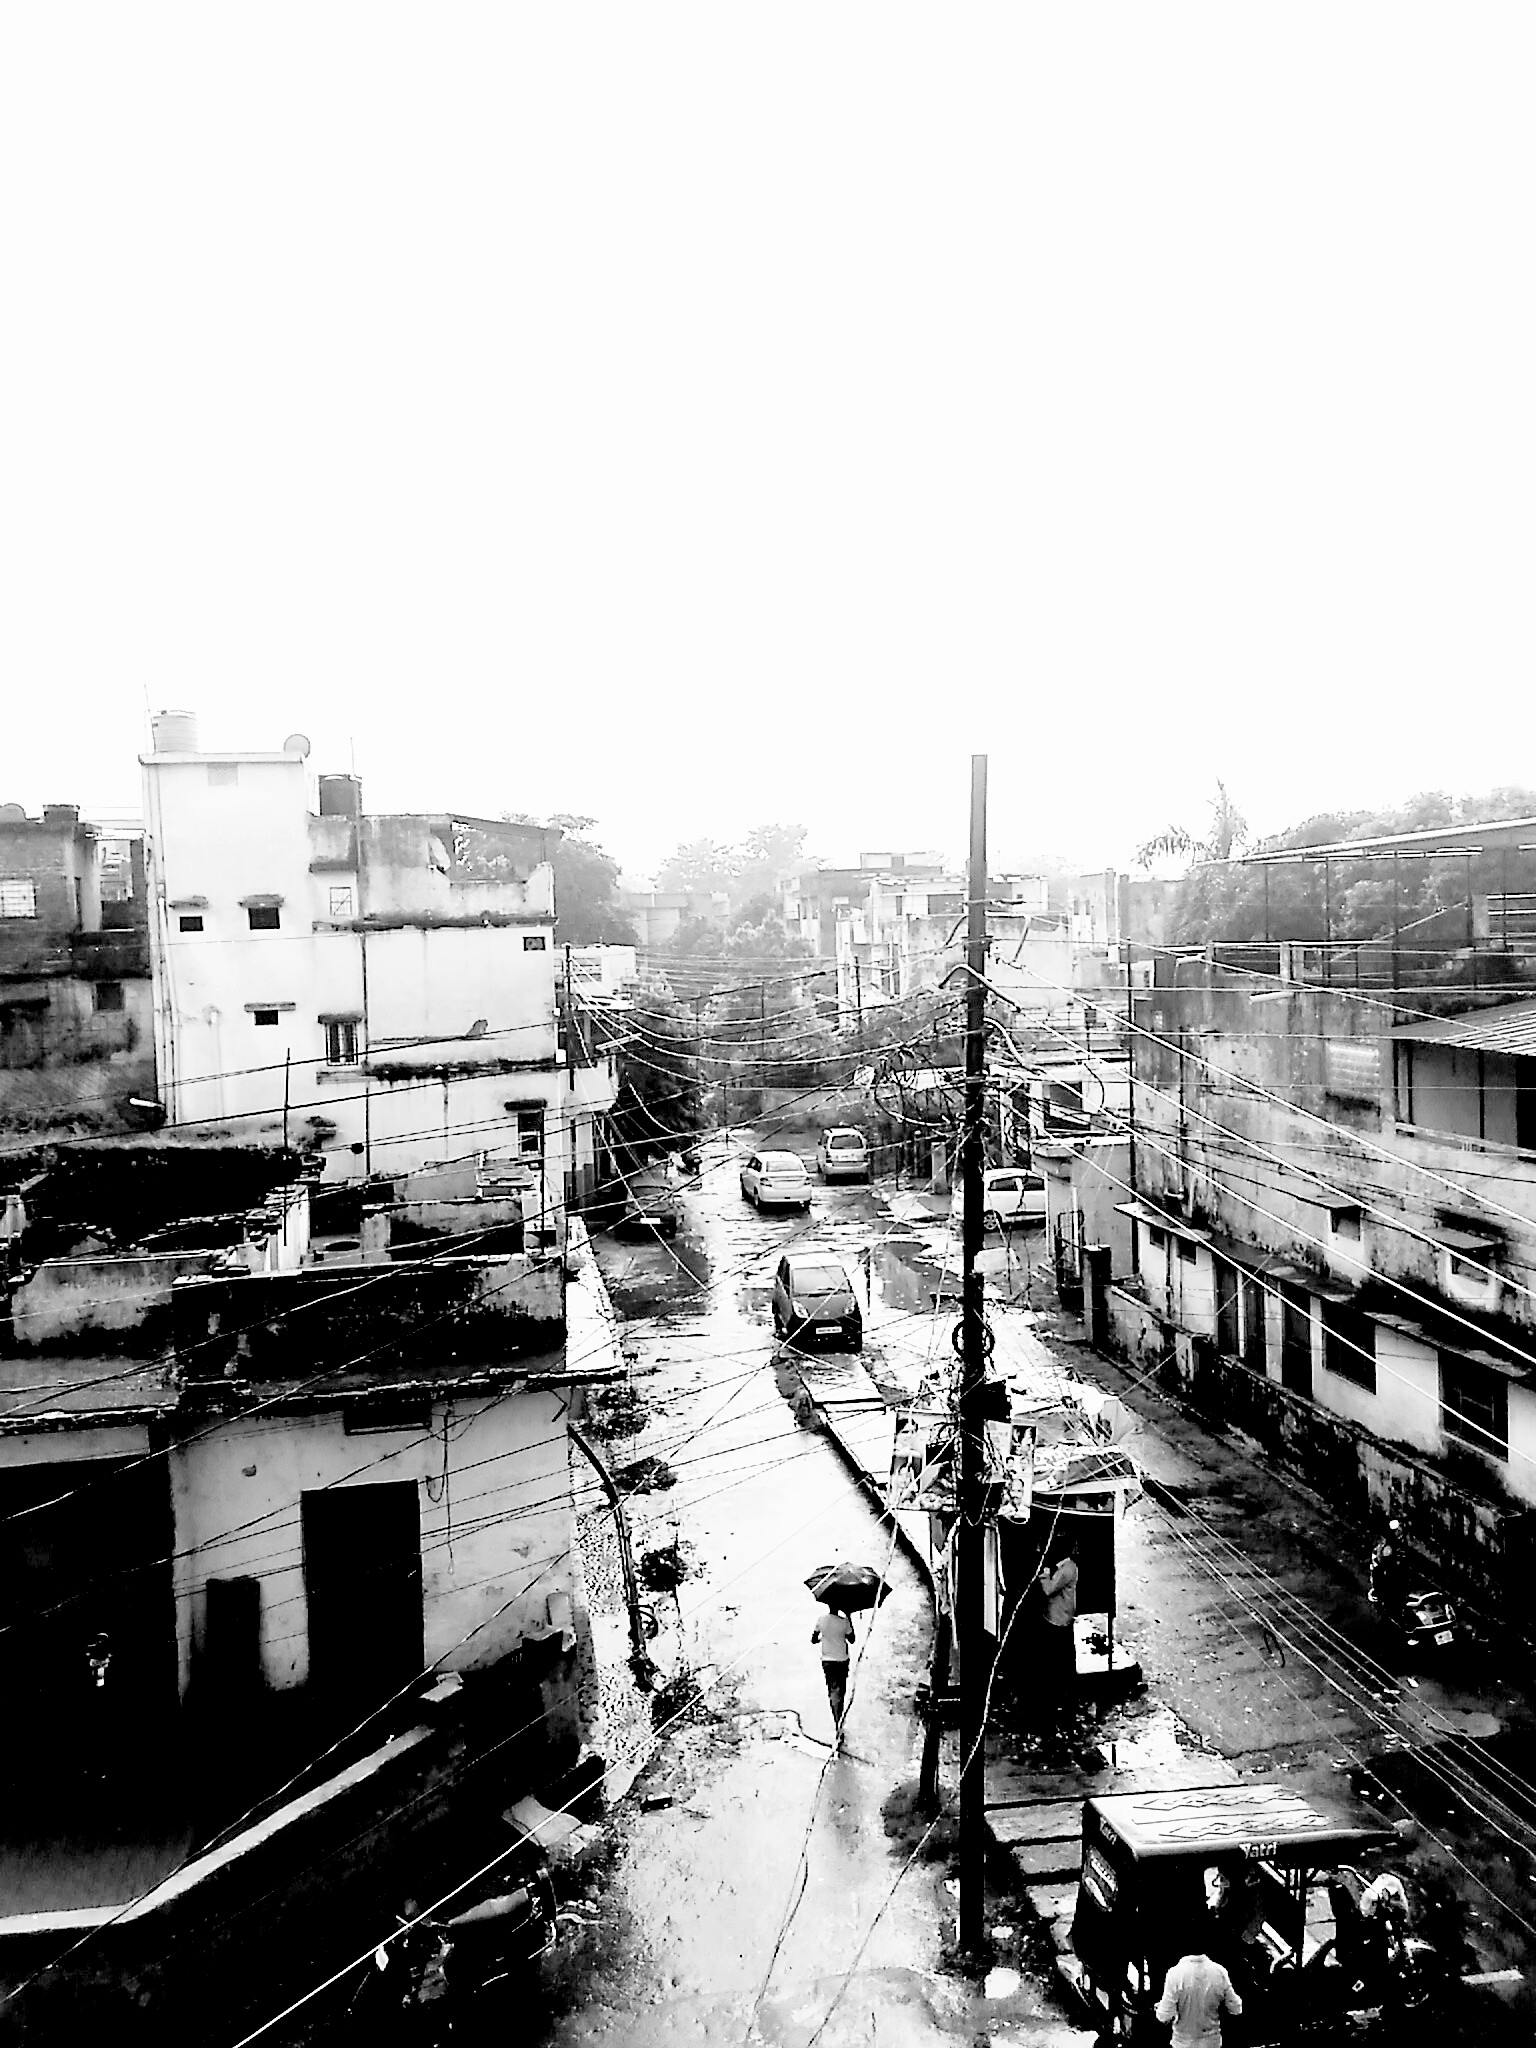 Free stock photo of black and white scenery, city life, rain